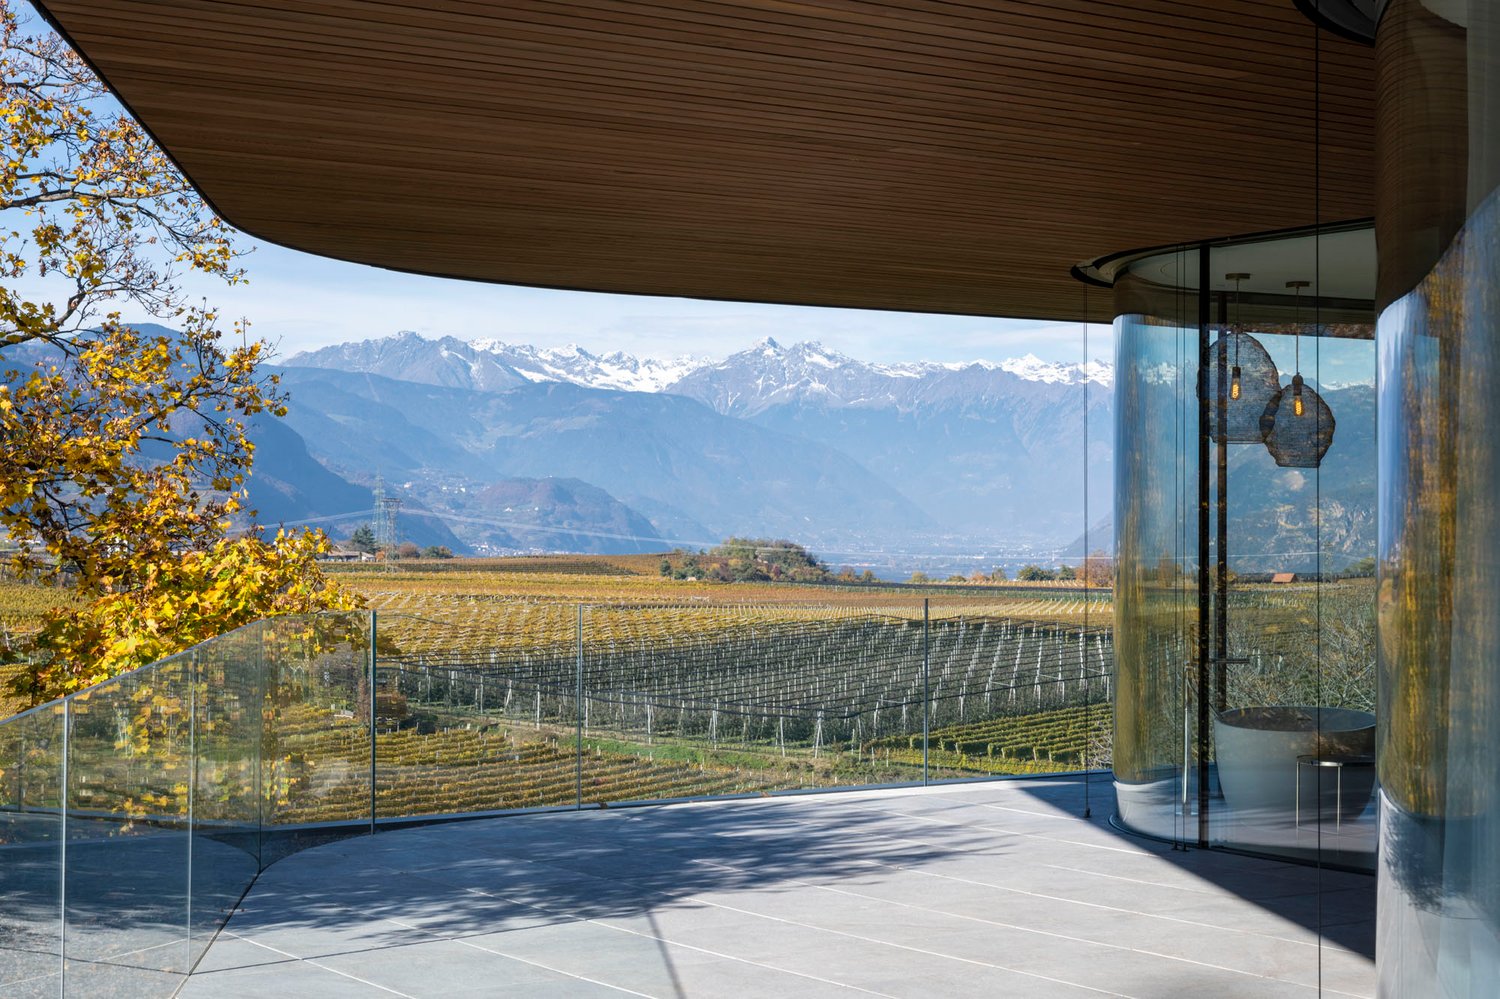 Set among vineyards and groves in Bolzano, Villa EB is reborn